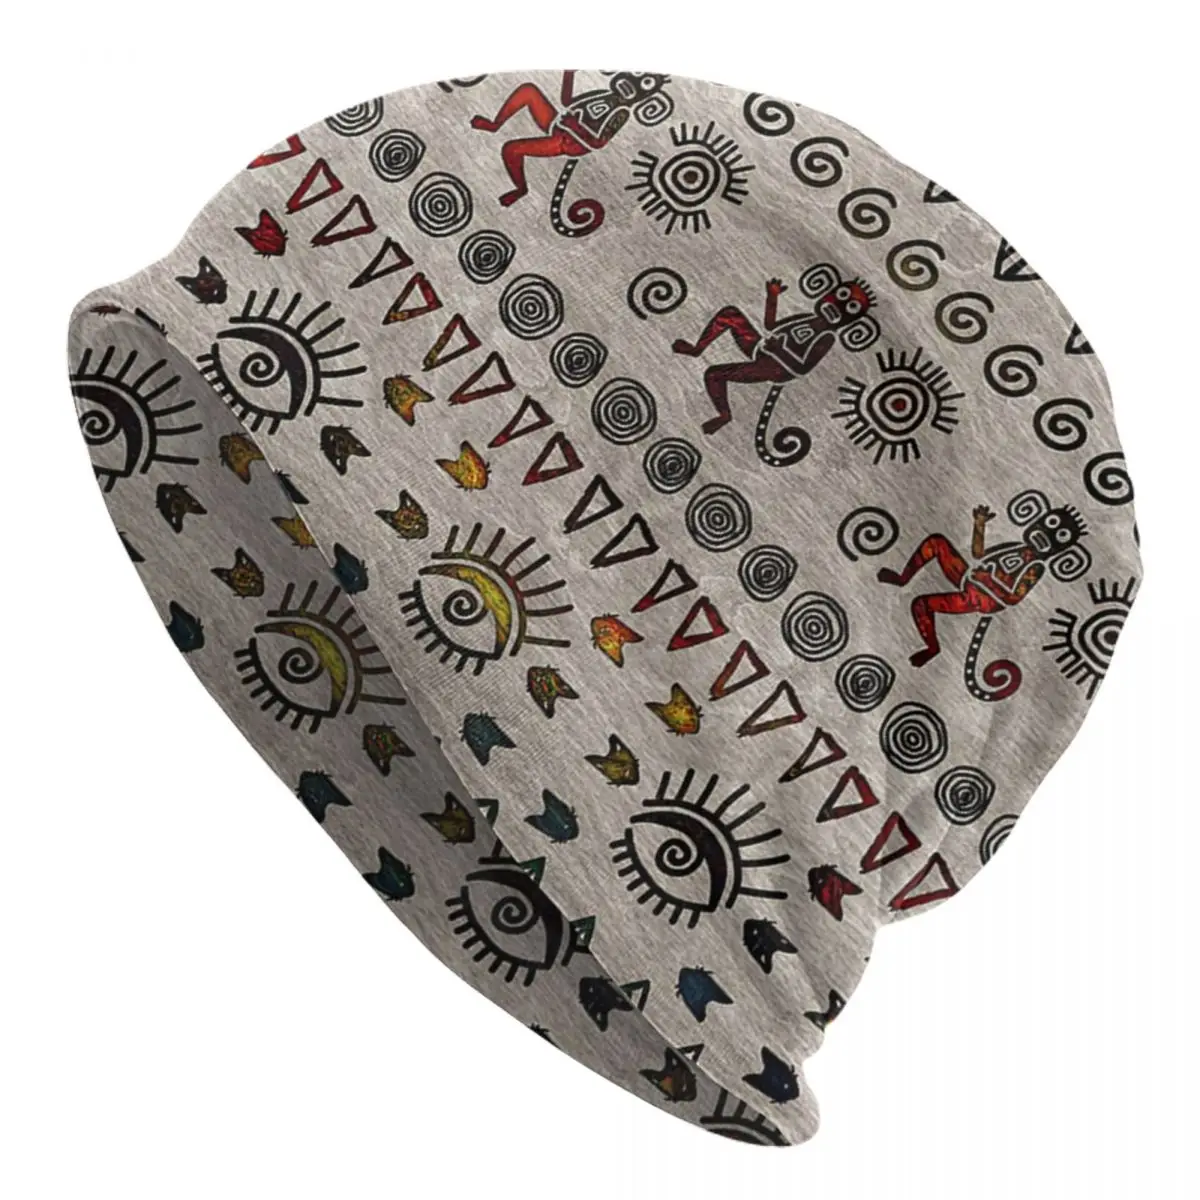 Aztec Symbols Pattern On Wood Adult Men's Women's Knit Hat Keep warm winter Funny knitted hat